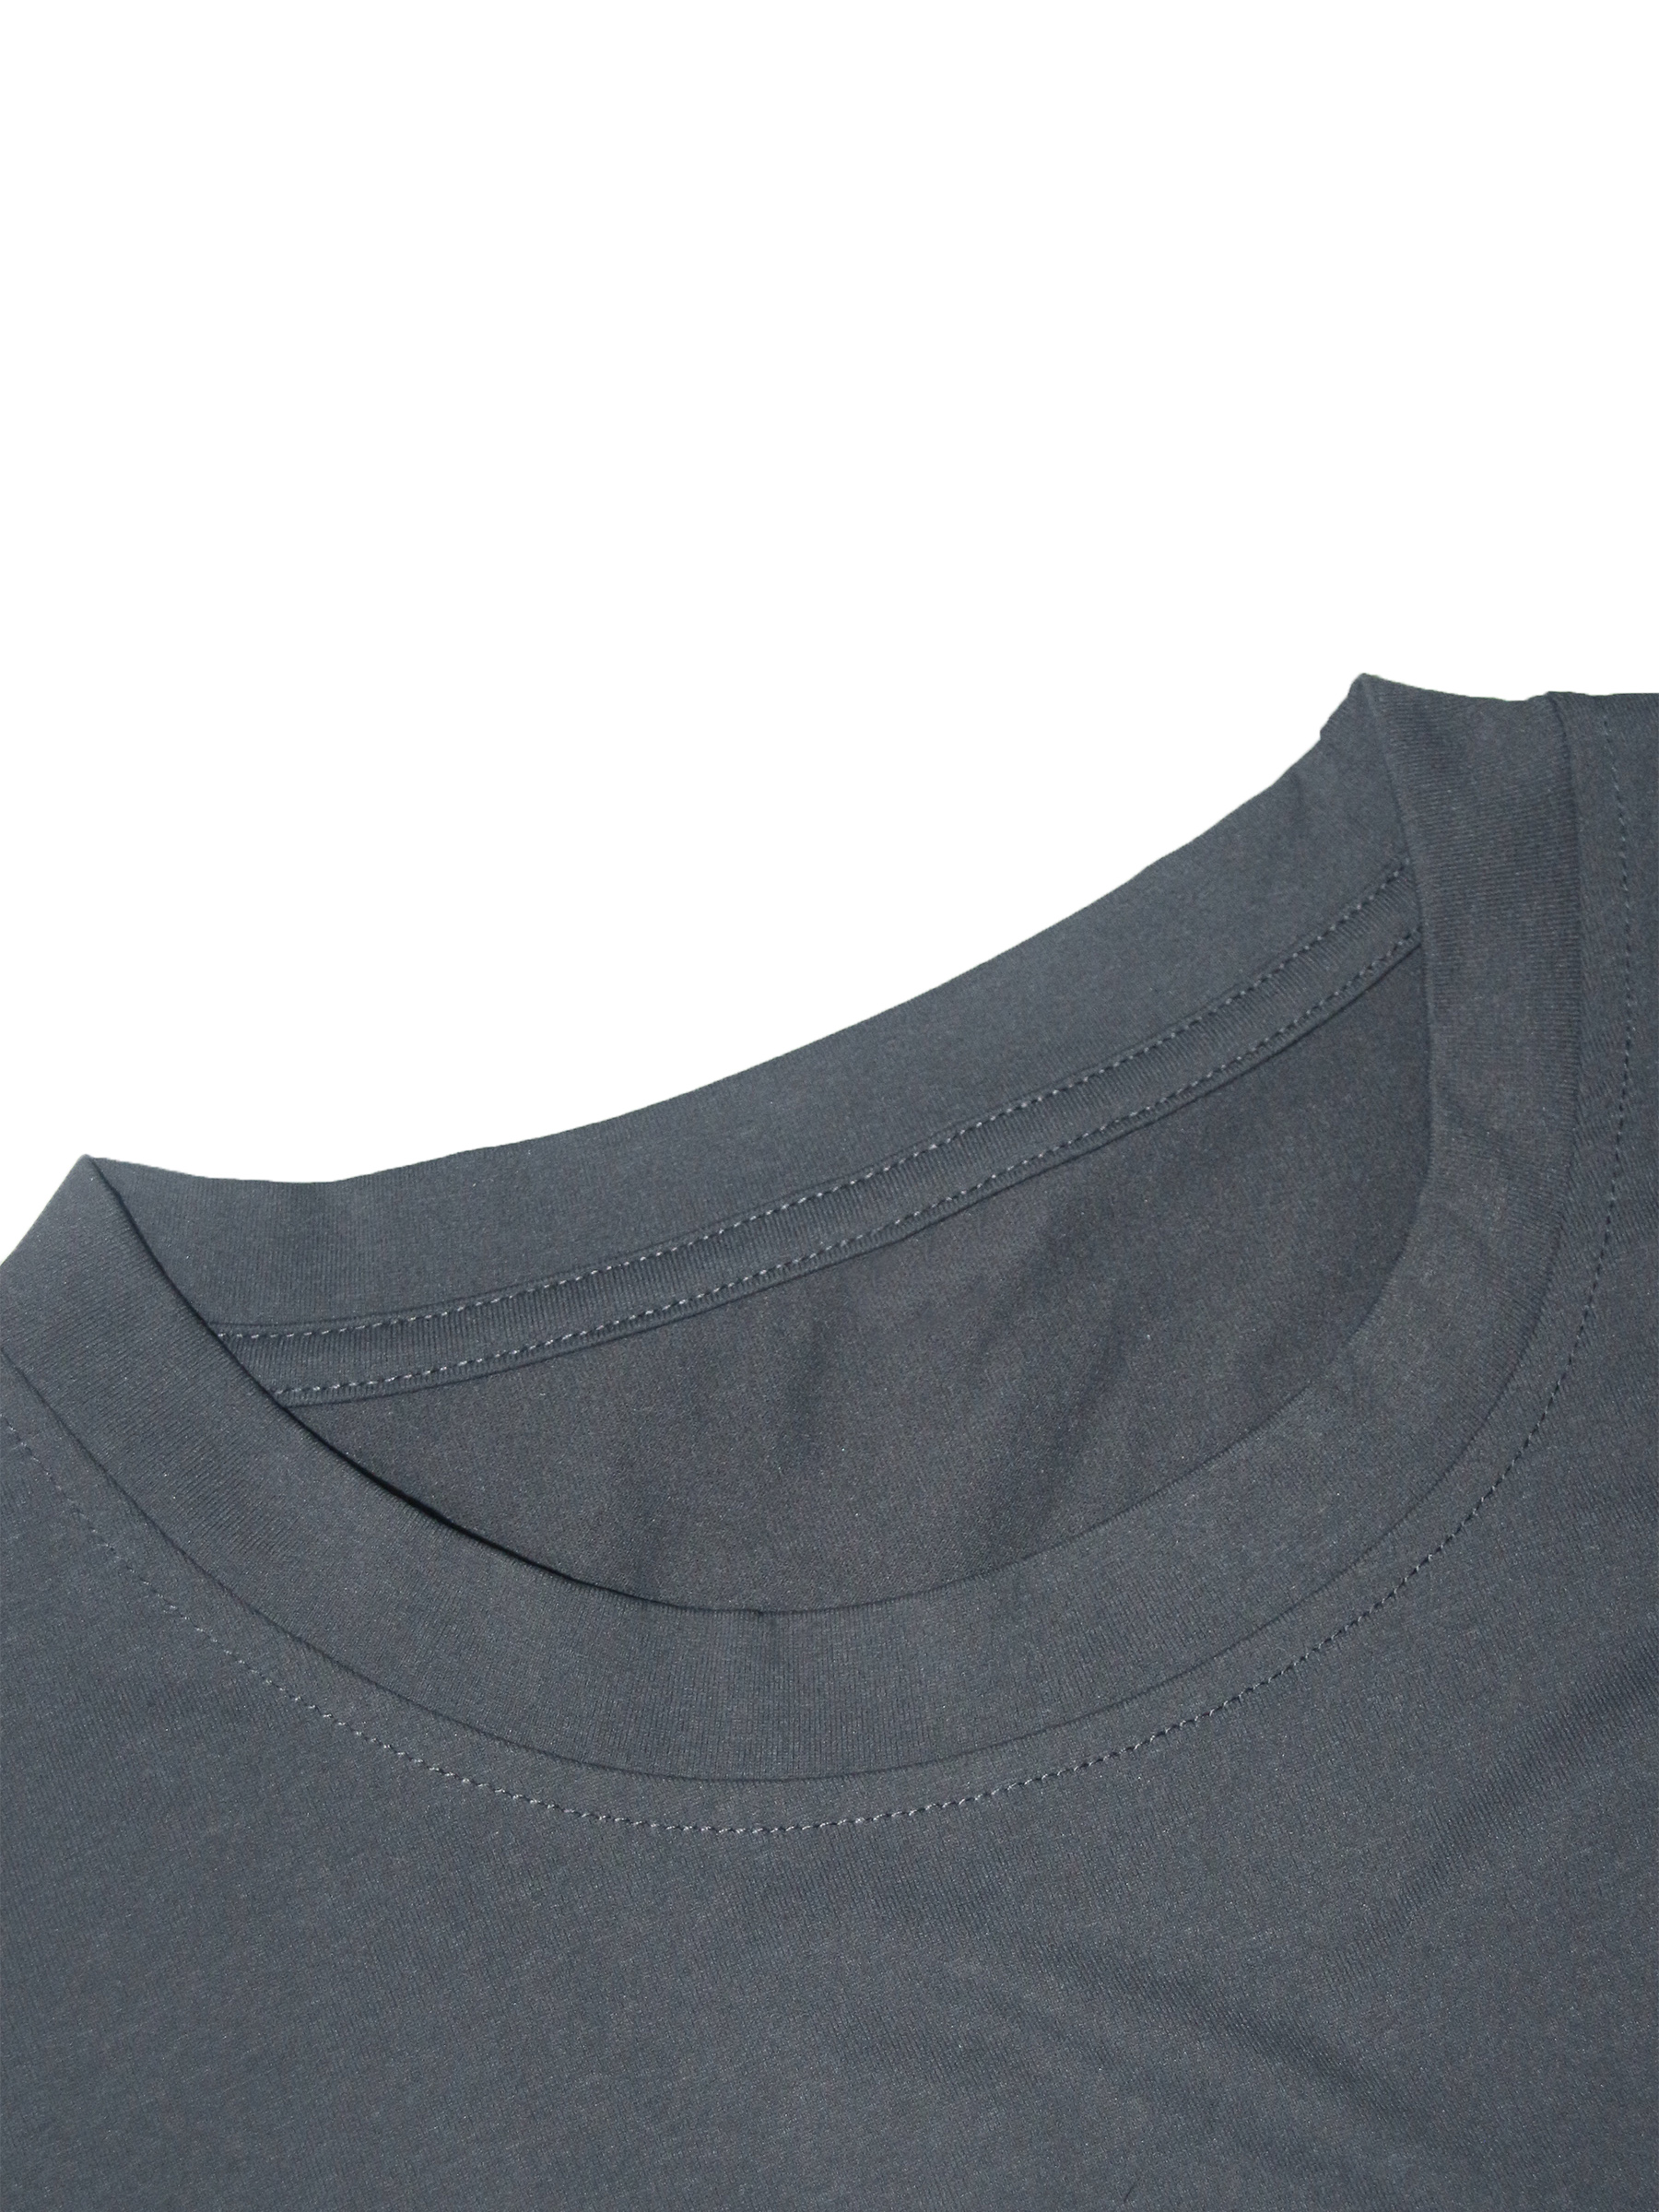 Plus Size Printed T-shirt, Dark Grey